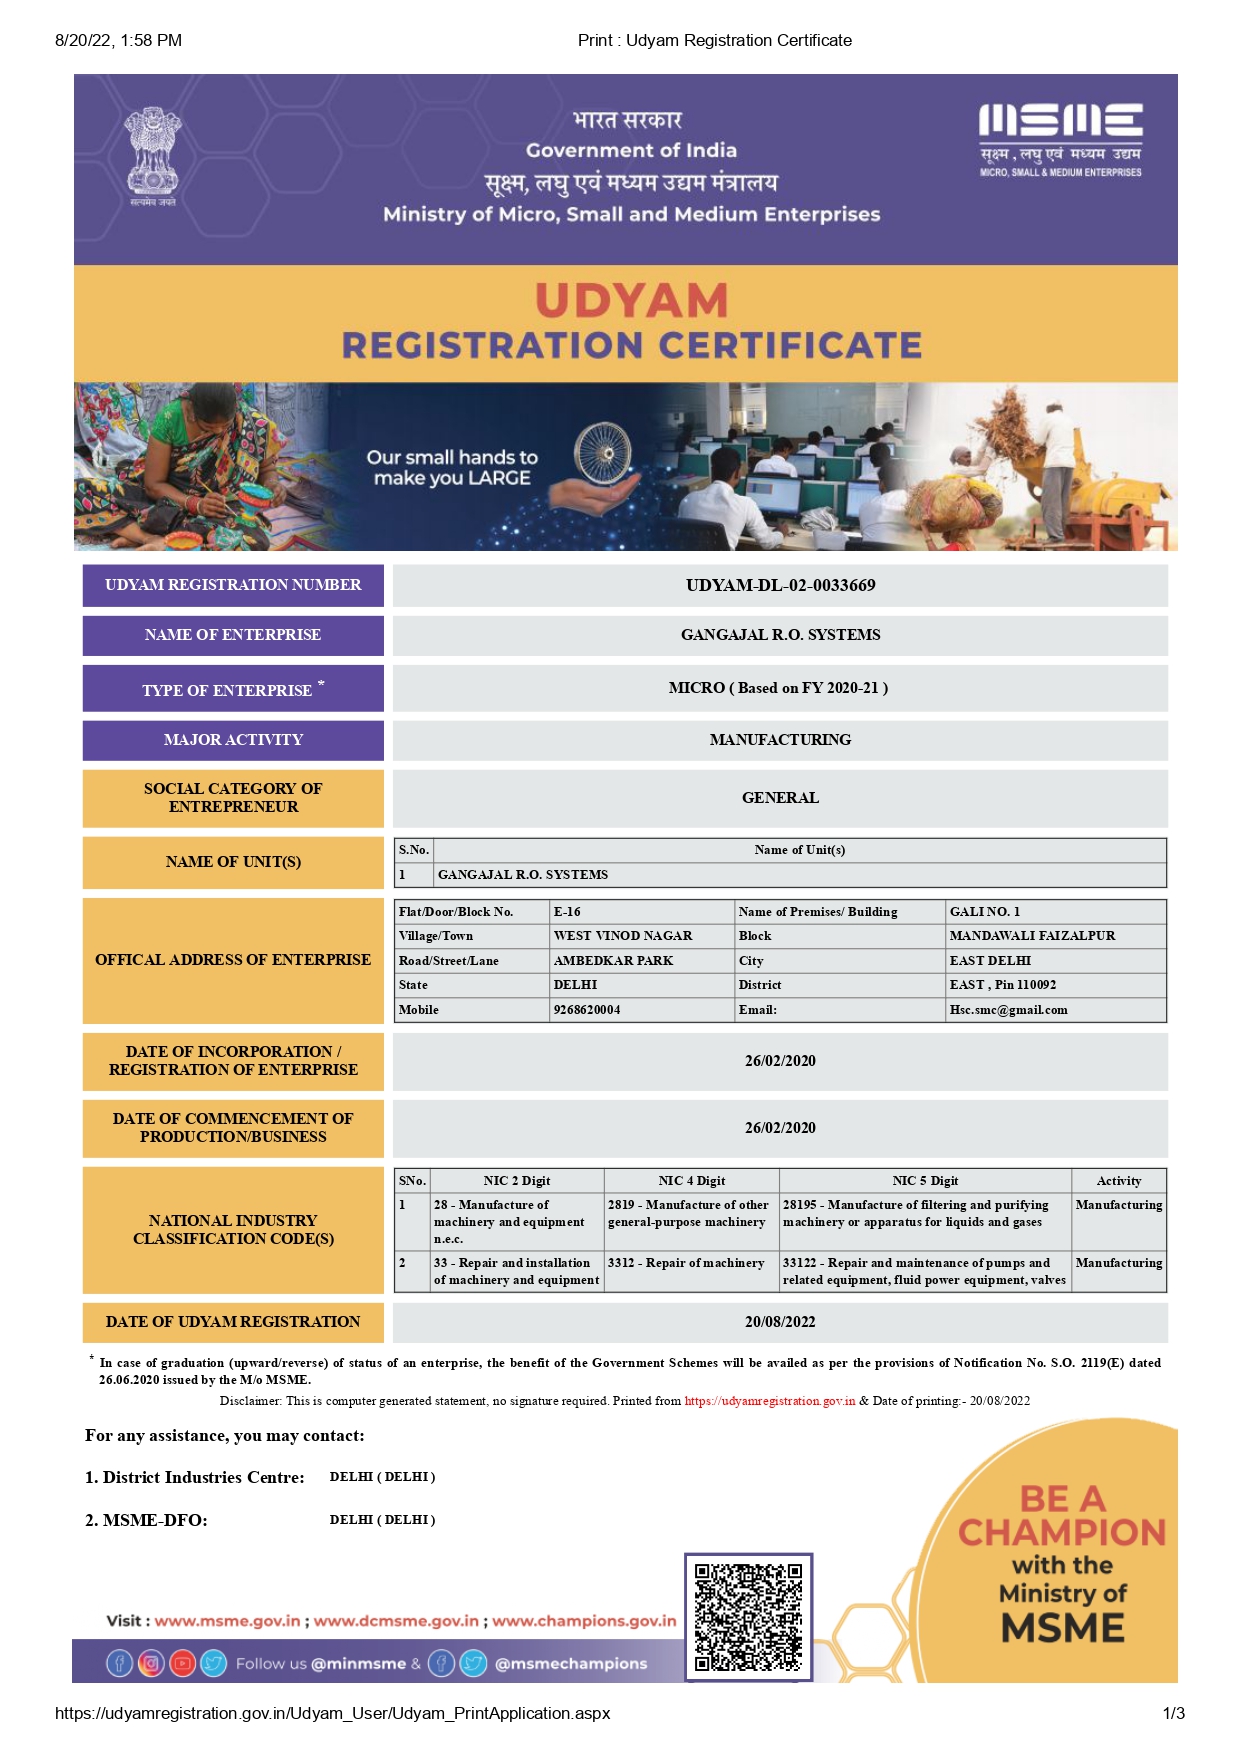 Udyam Registration Certificate